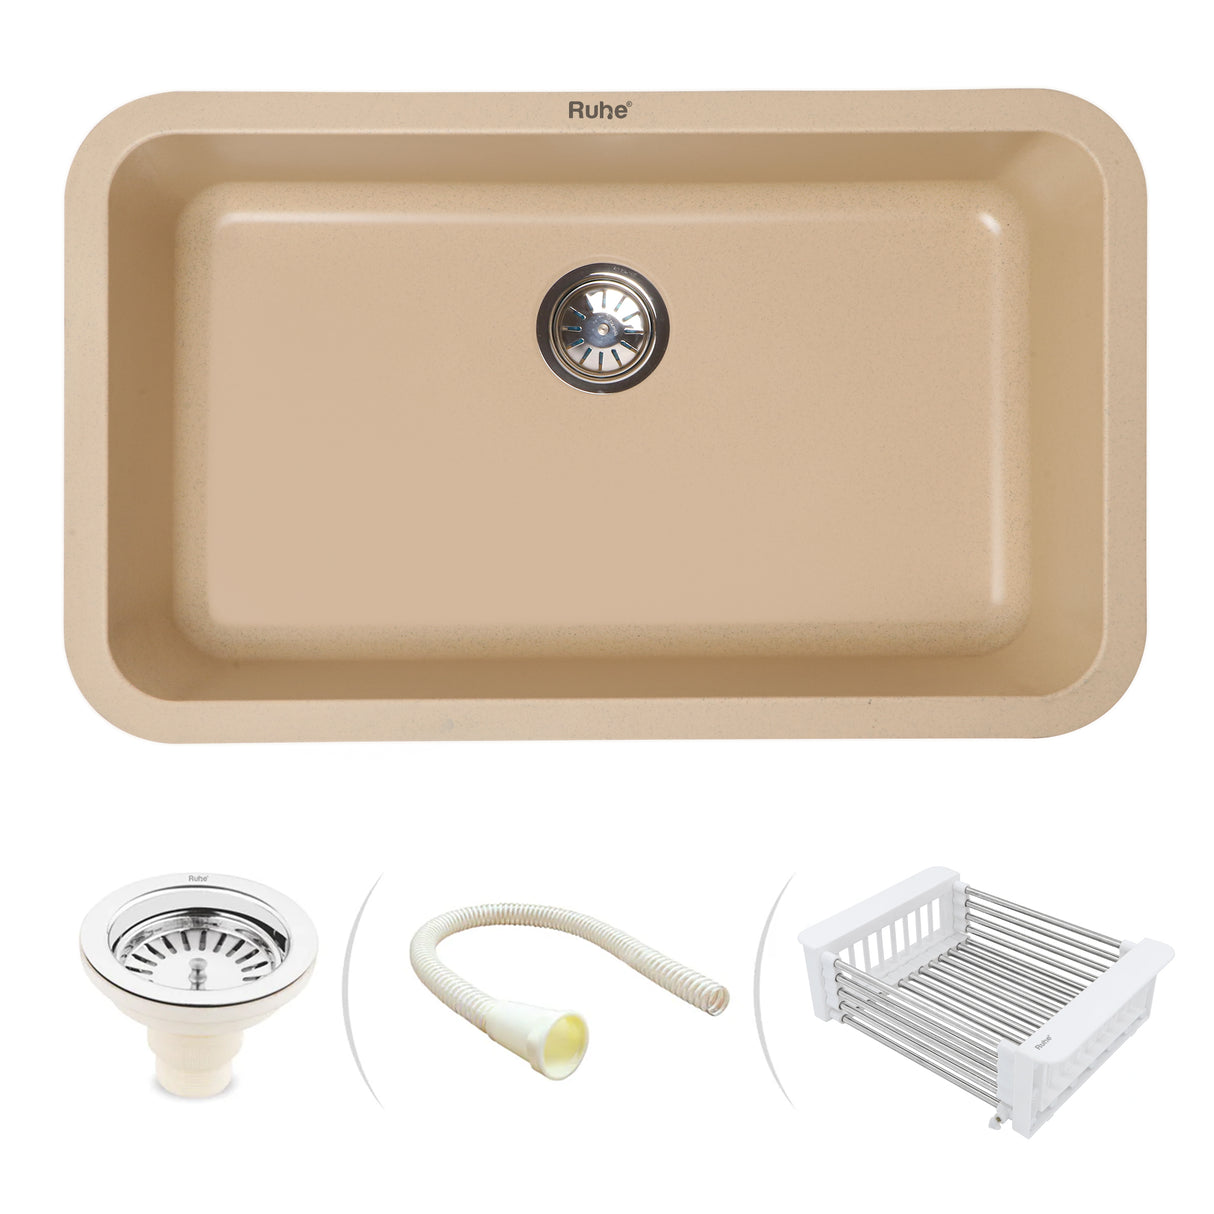 Quartz Single Bowl Kitchen Sink - Sand Choco (31 x 19 x 9 inches) - by Ruhe®